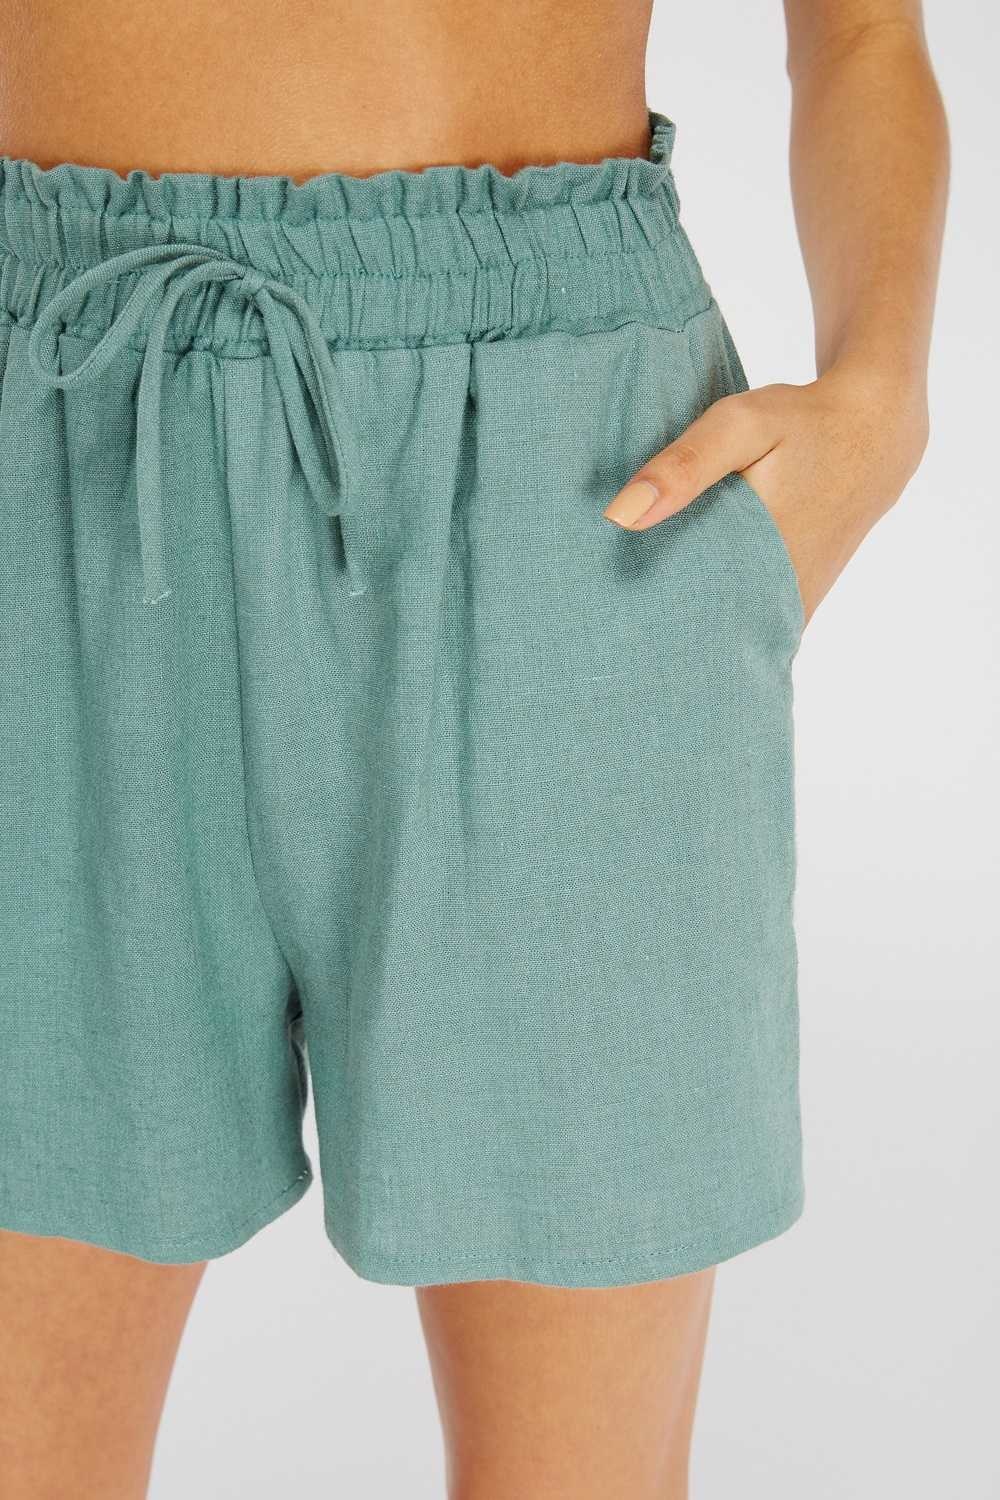 Black High-Waist Linen Shorts - Blush Boutique